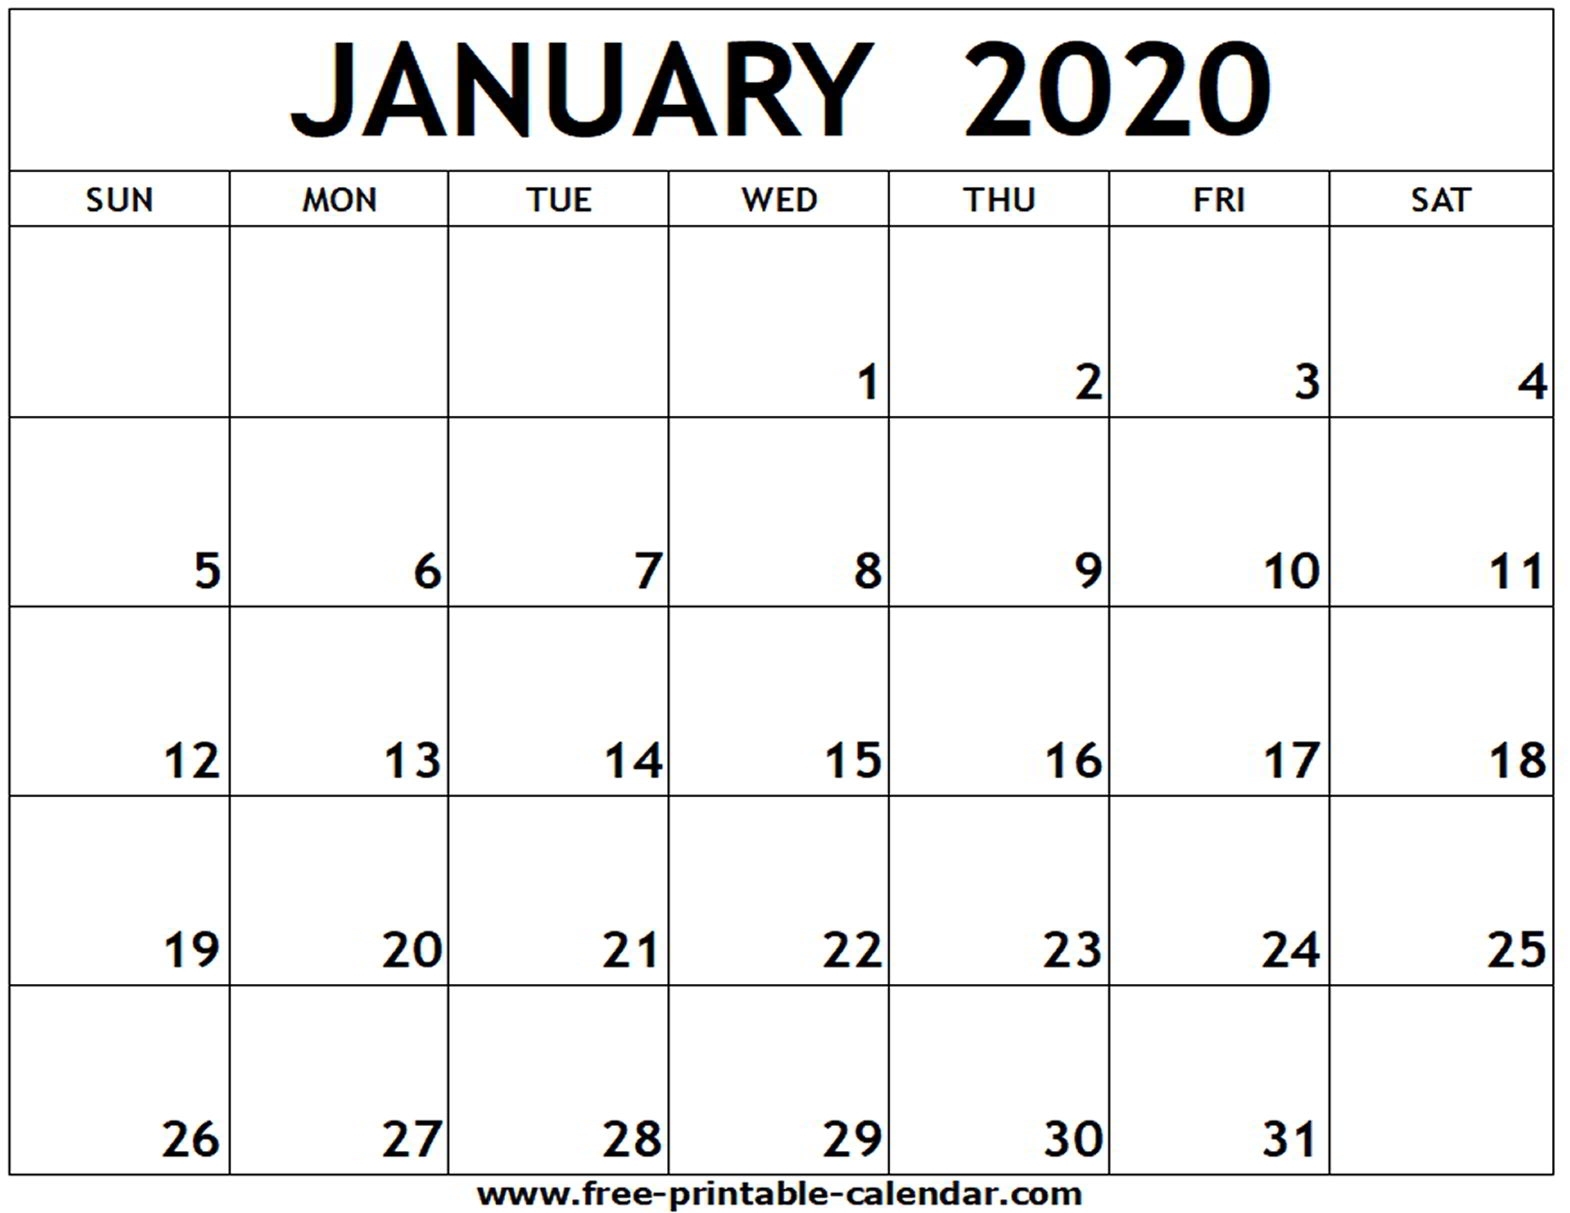 January 2020 Printable Calendar - Free-Printable-Calendar